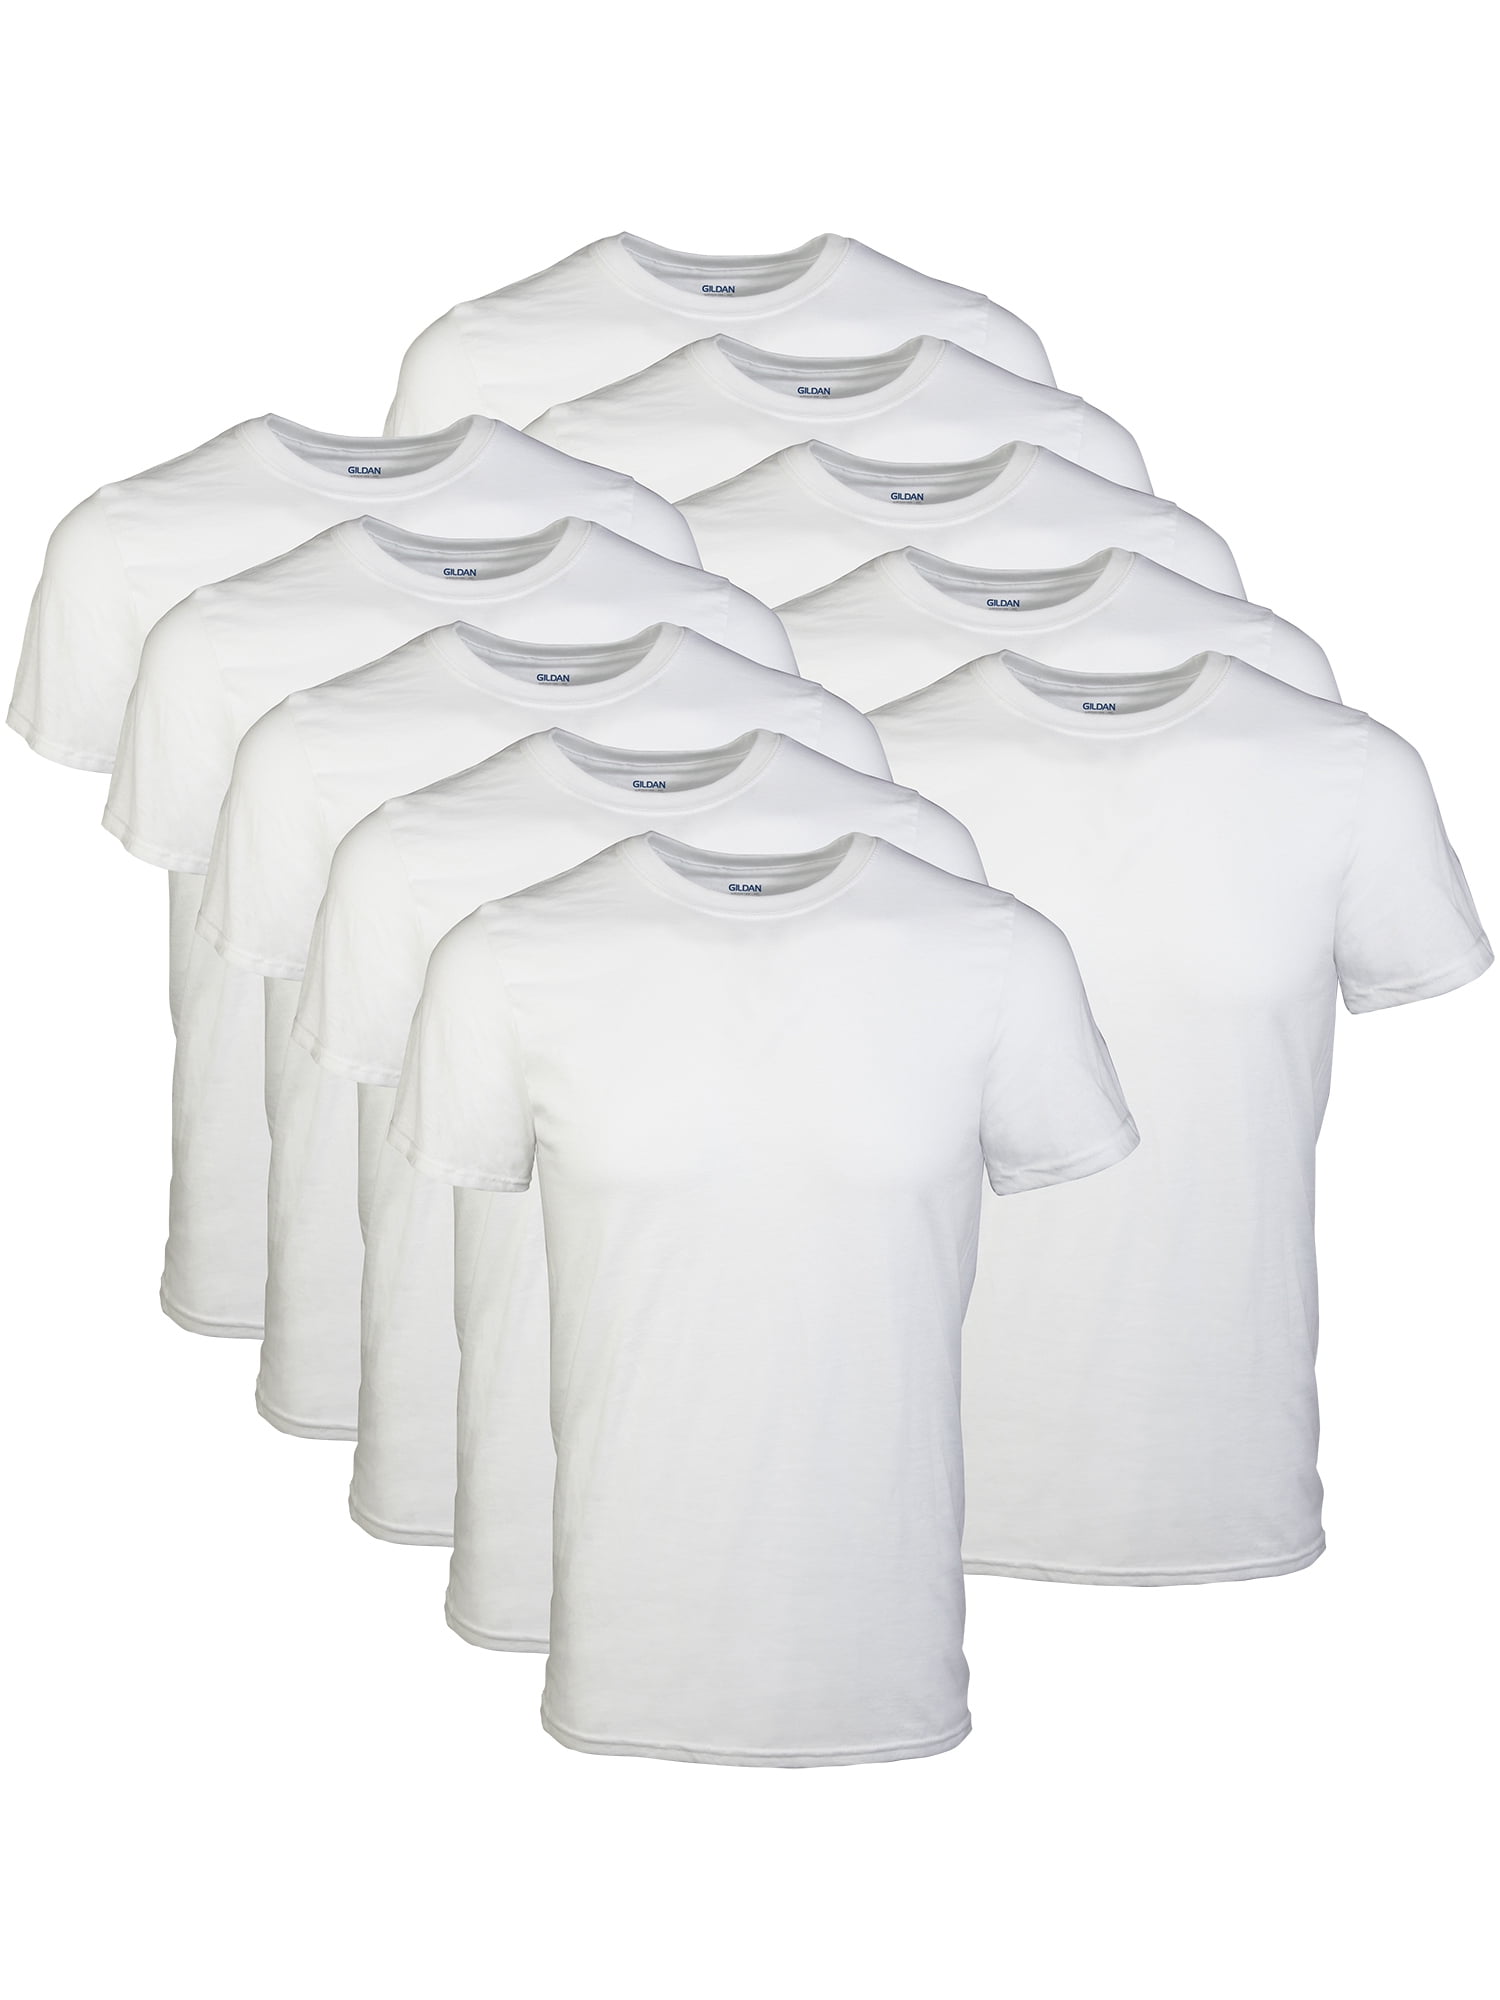 Gildan Adult Men's Tag Free, Crew T-shirts, White, 12-Pack, Sizes S-2XL ...